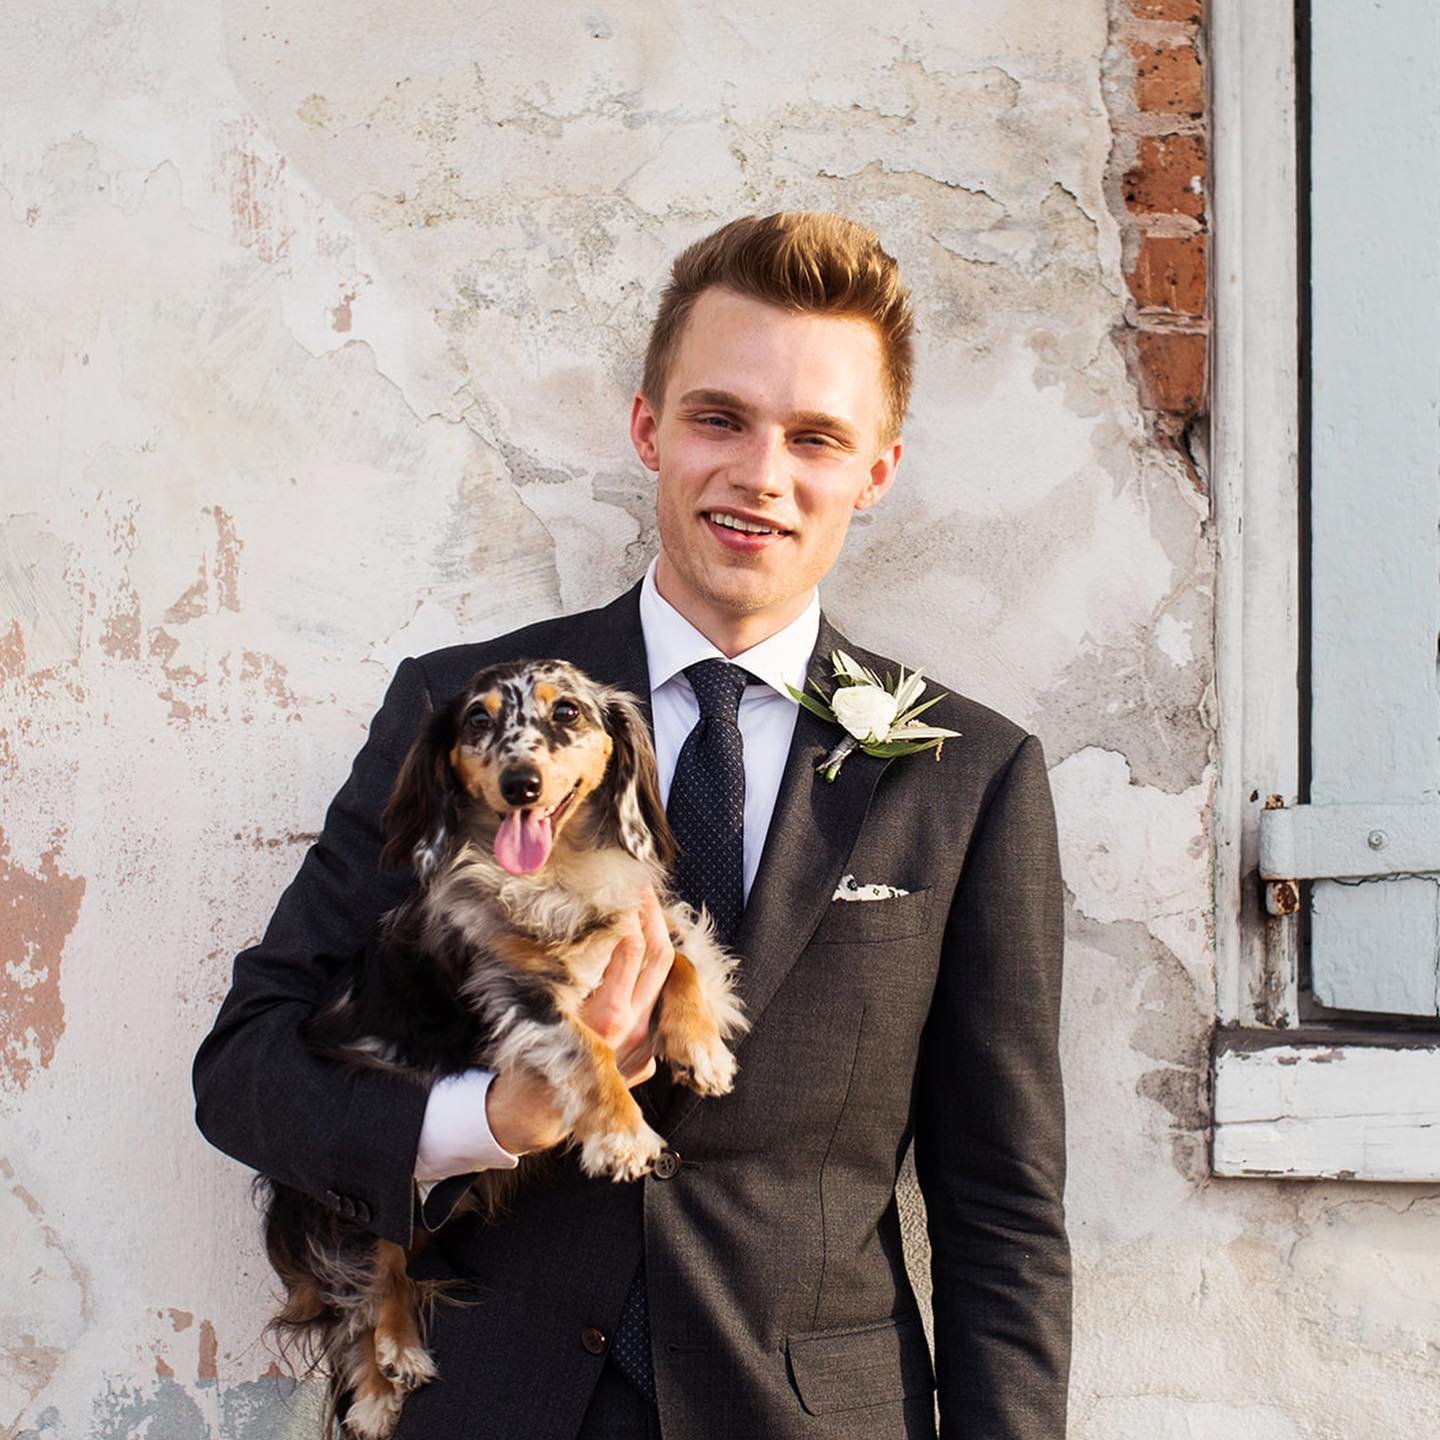 Doggies + weddings ✌🏻